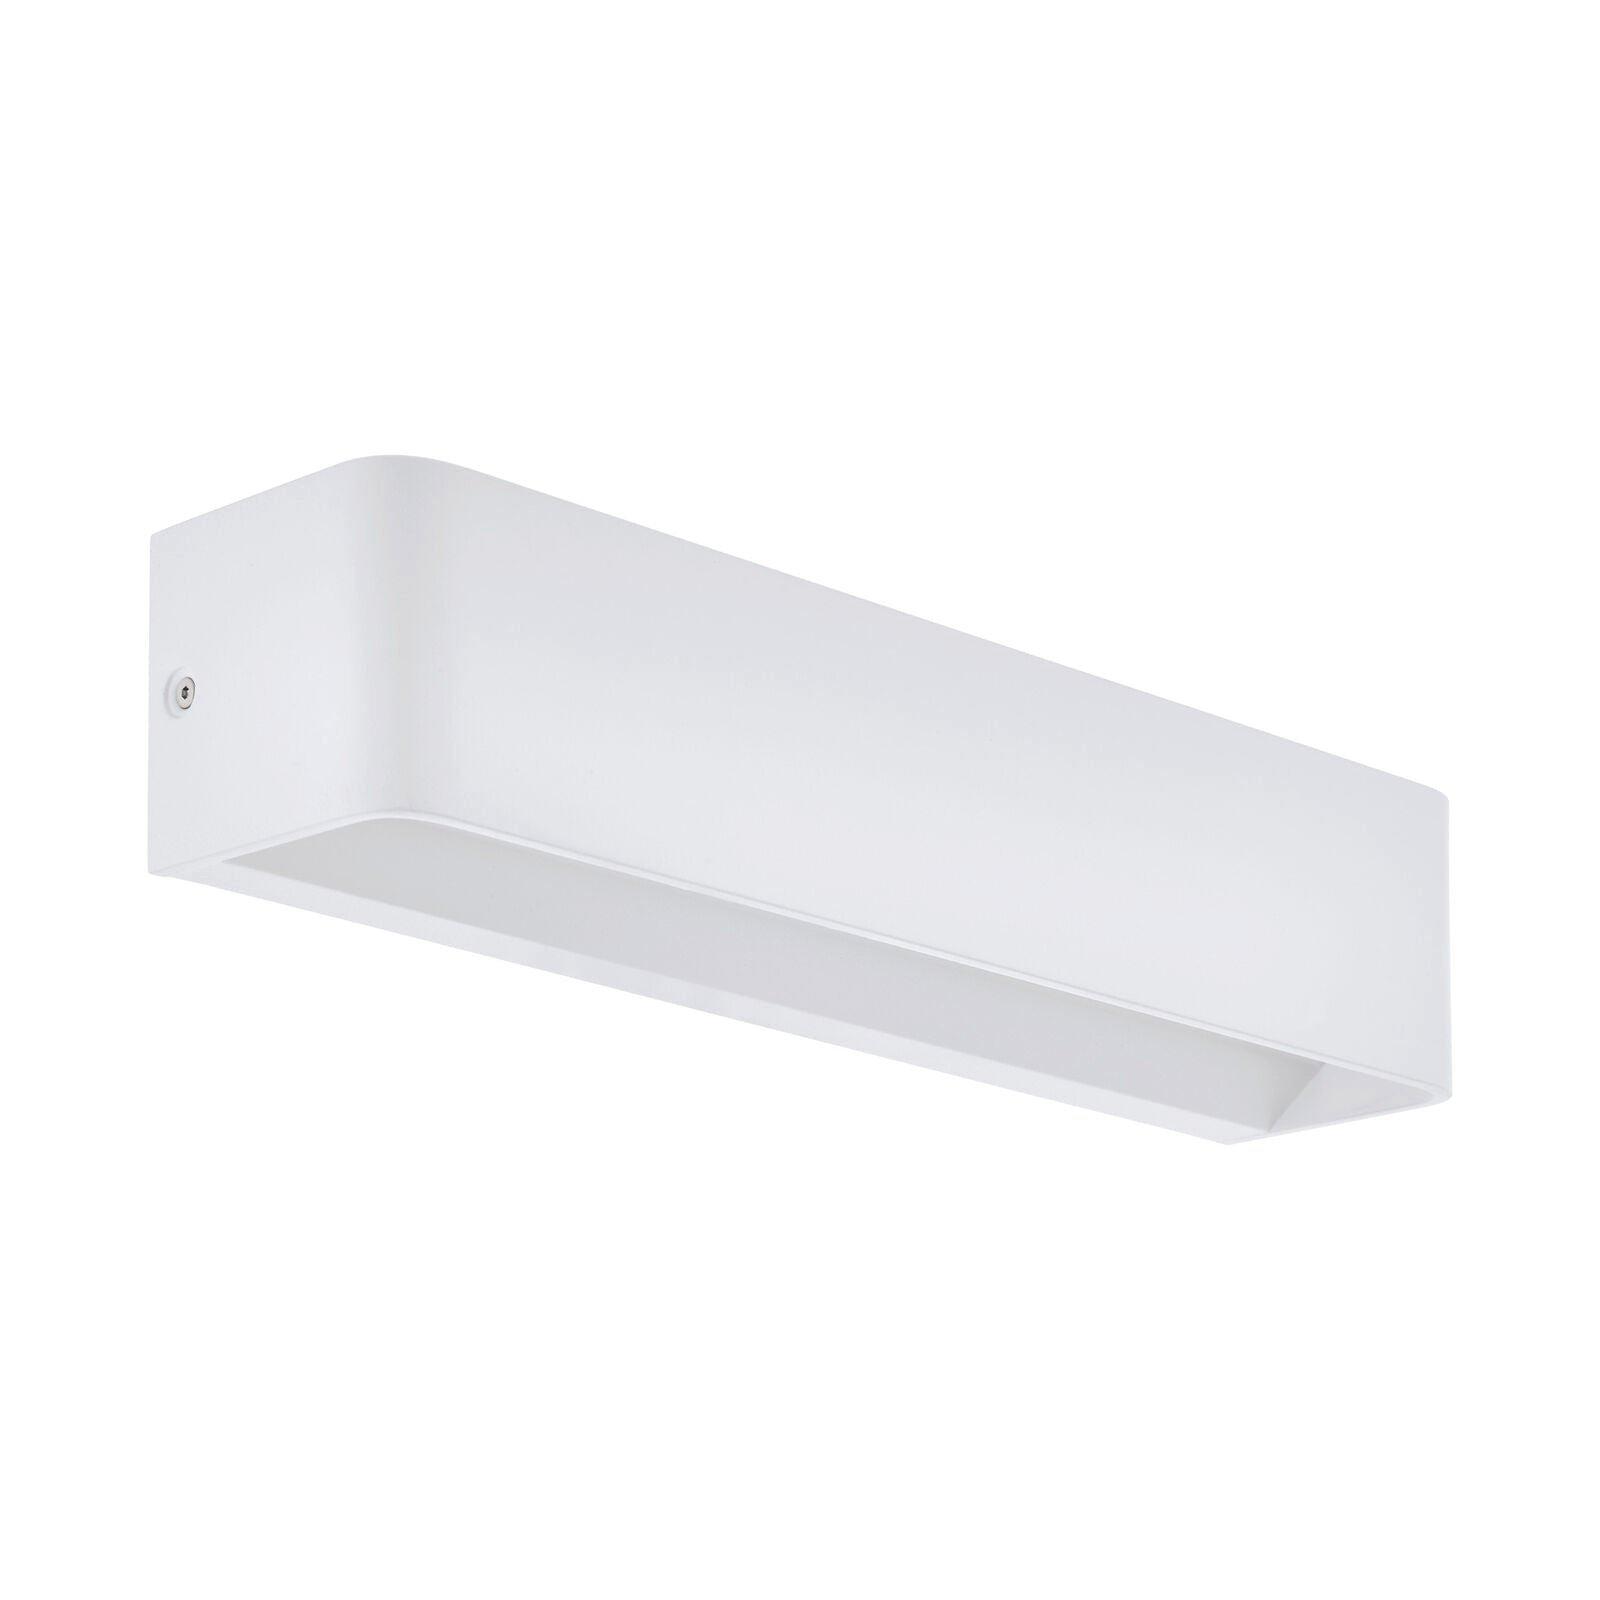 Wall Light Colour White Oblong Box Shape Snug Fitting Bulb LED 12W Included